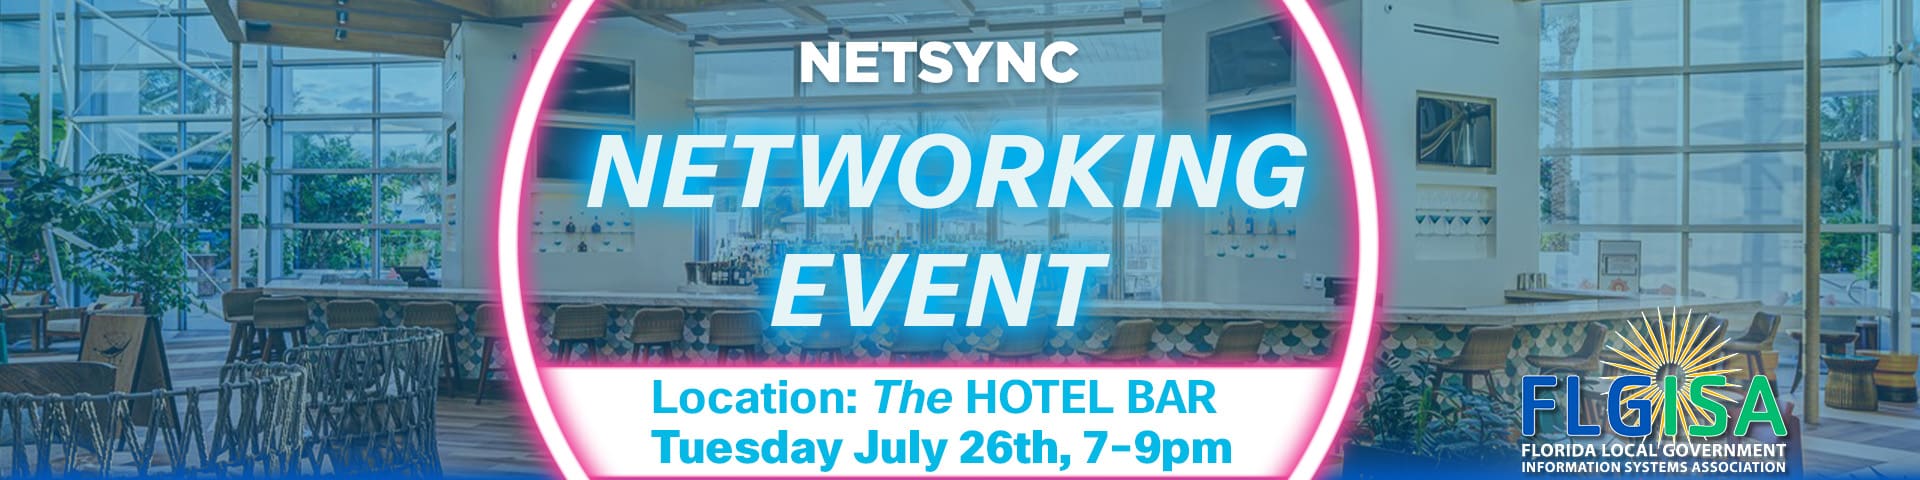 FLGSIA Netsync Networking Event